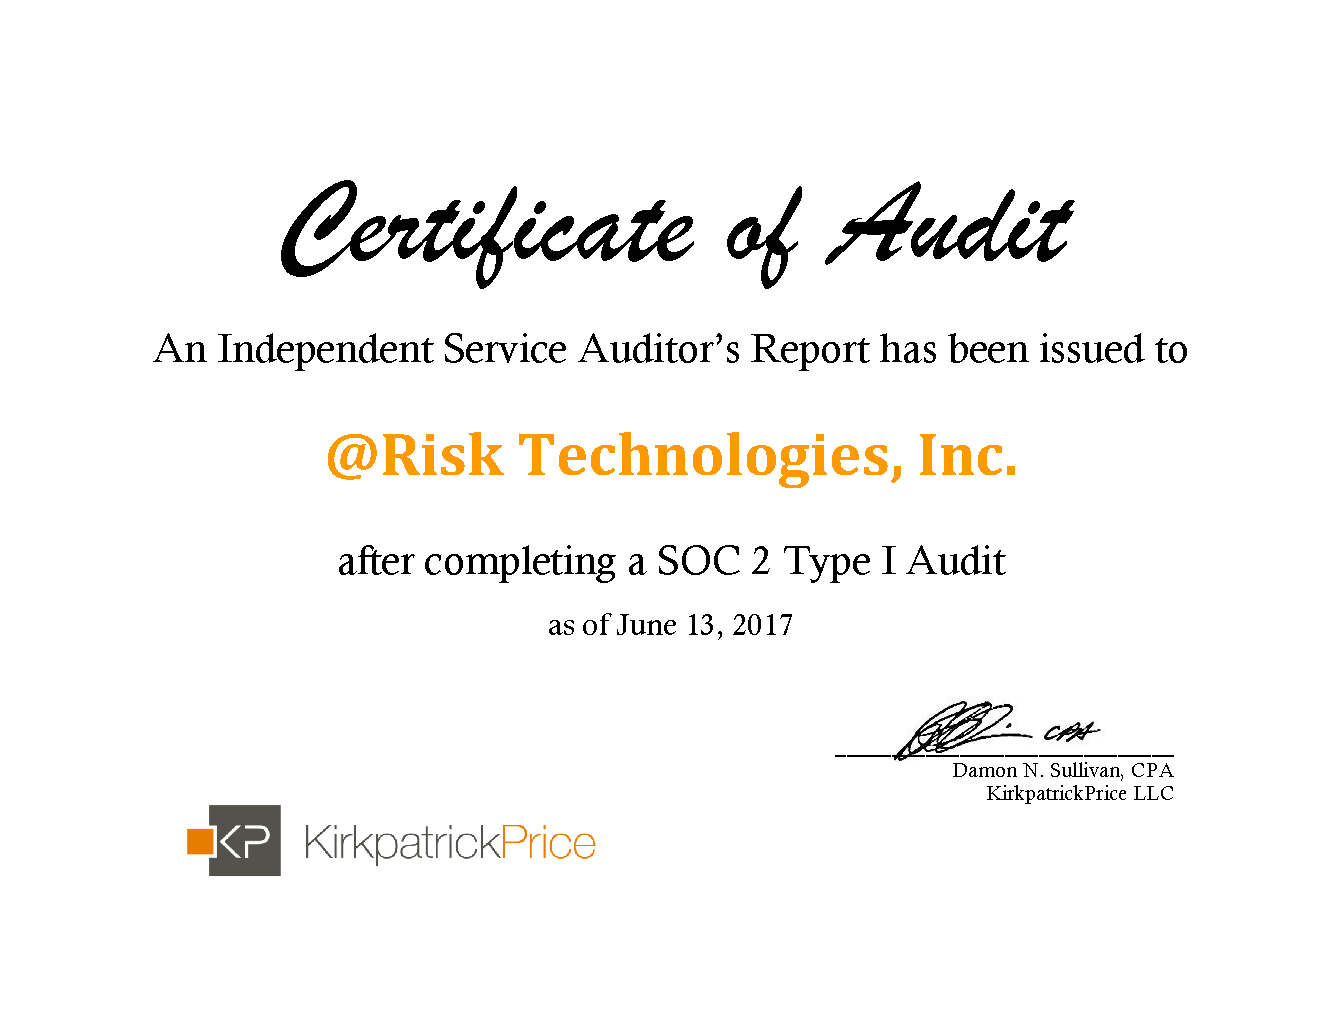 @RISK SOC 2 Certificate